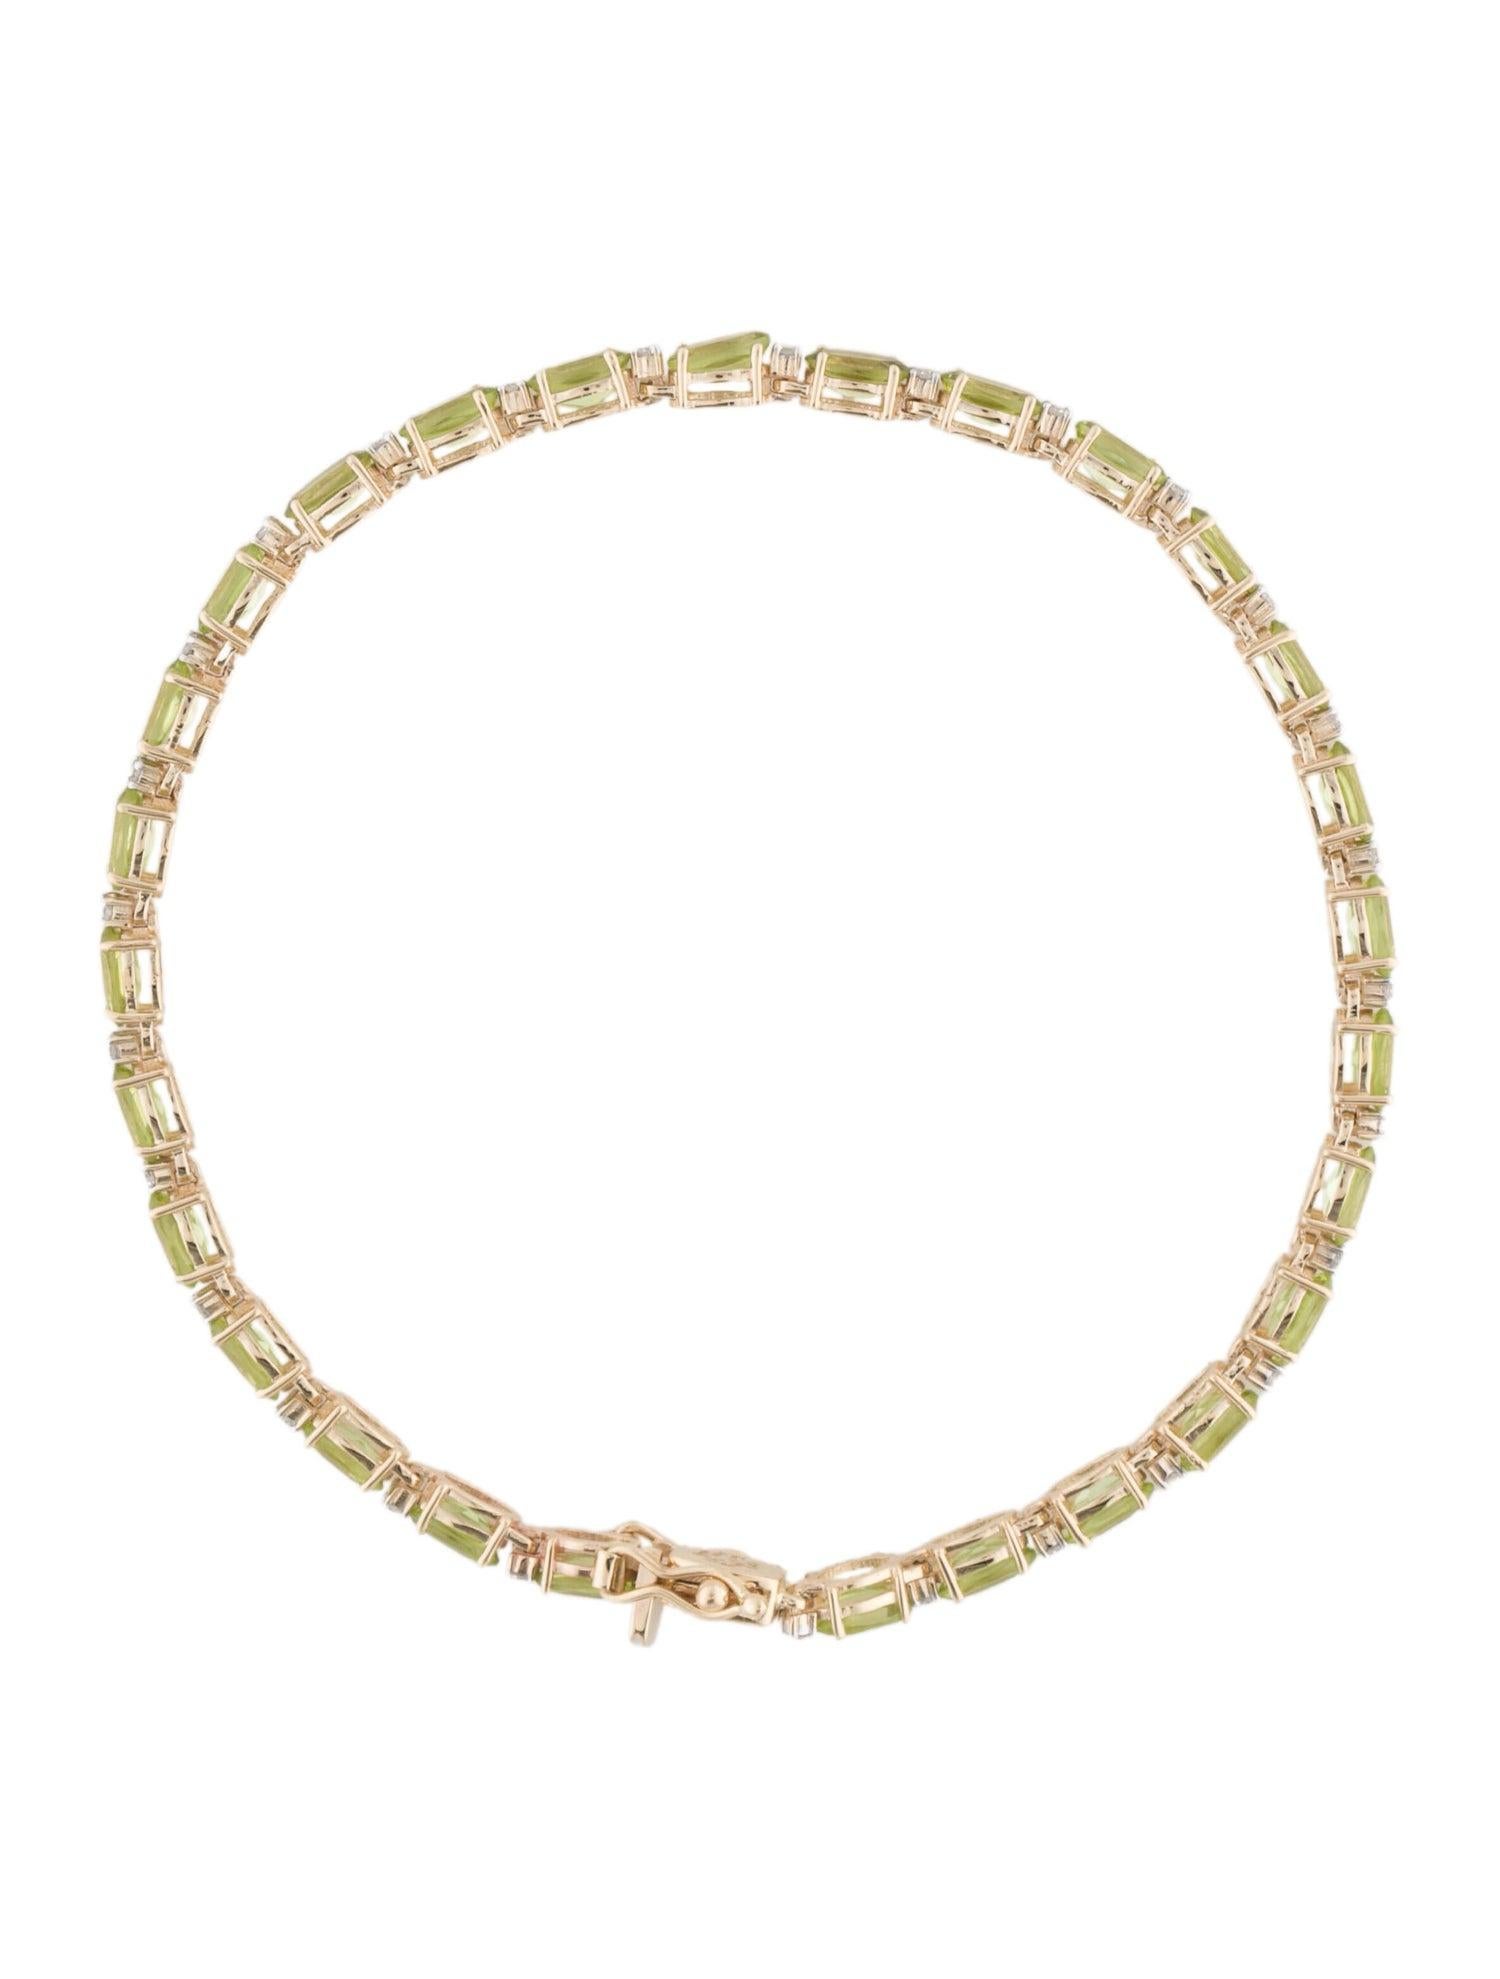 Taille brillant 14K Peridot & Diamond Link Bracelet - Vibrant Gemstone Elegance, Timeless Luxury en vente